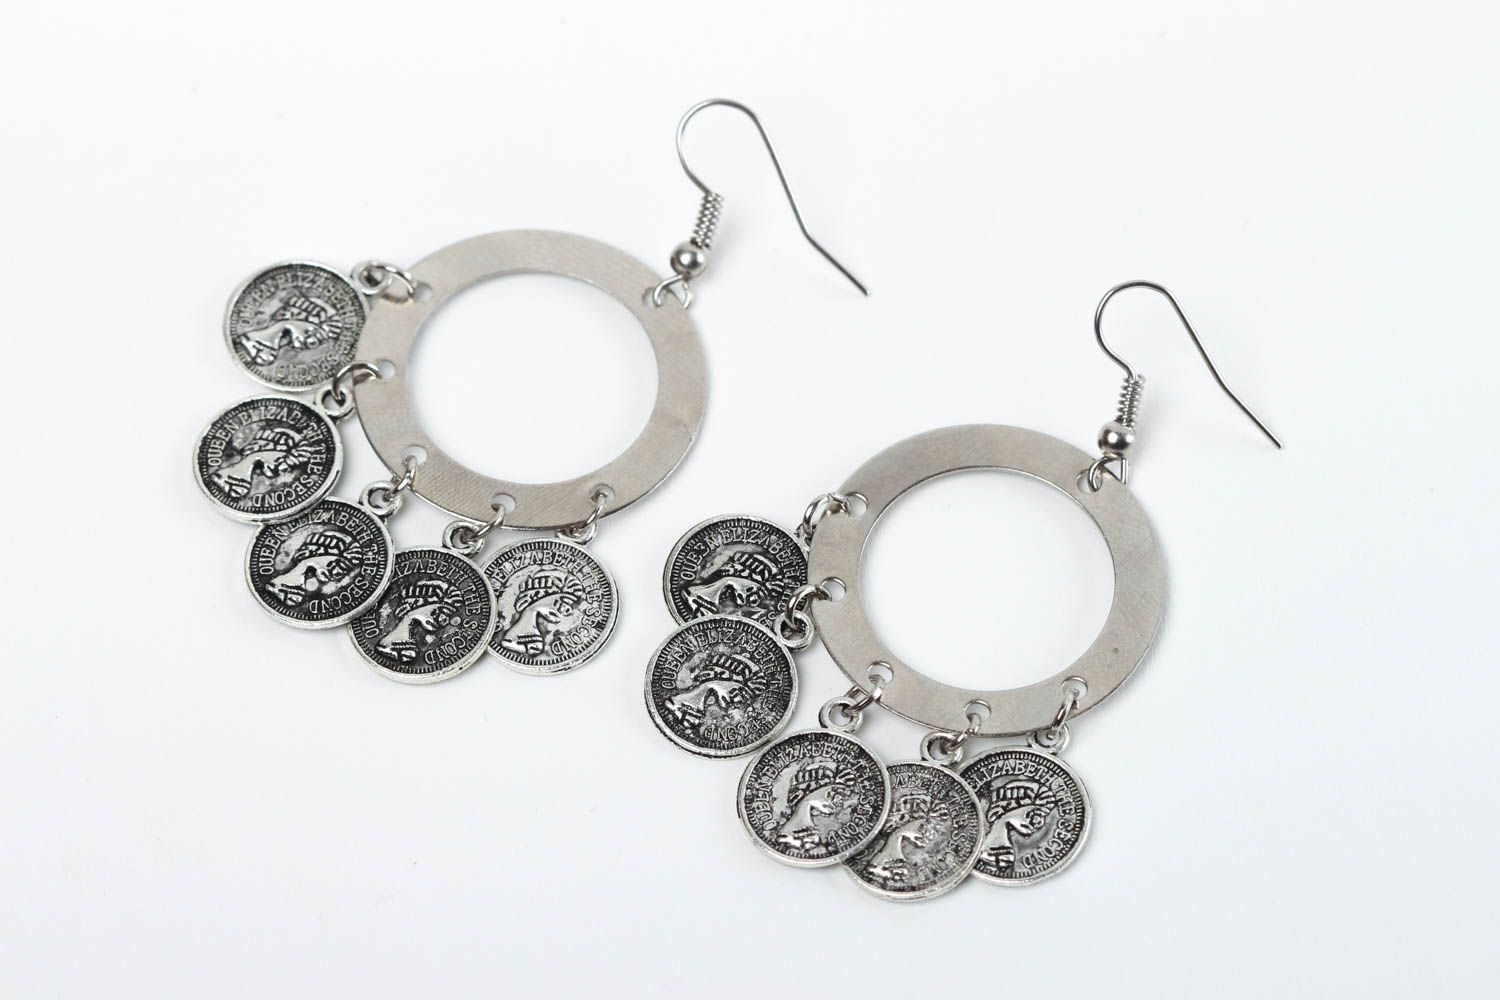 Handmade earrings designer jewelry unusual accessory gift ideas earrings for her photo 2